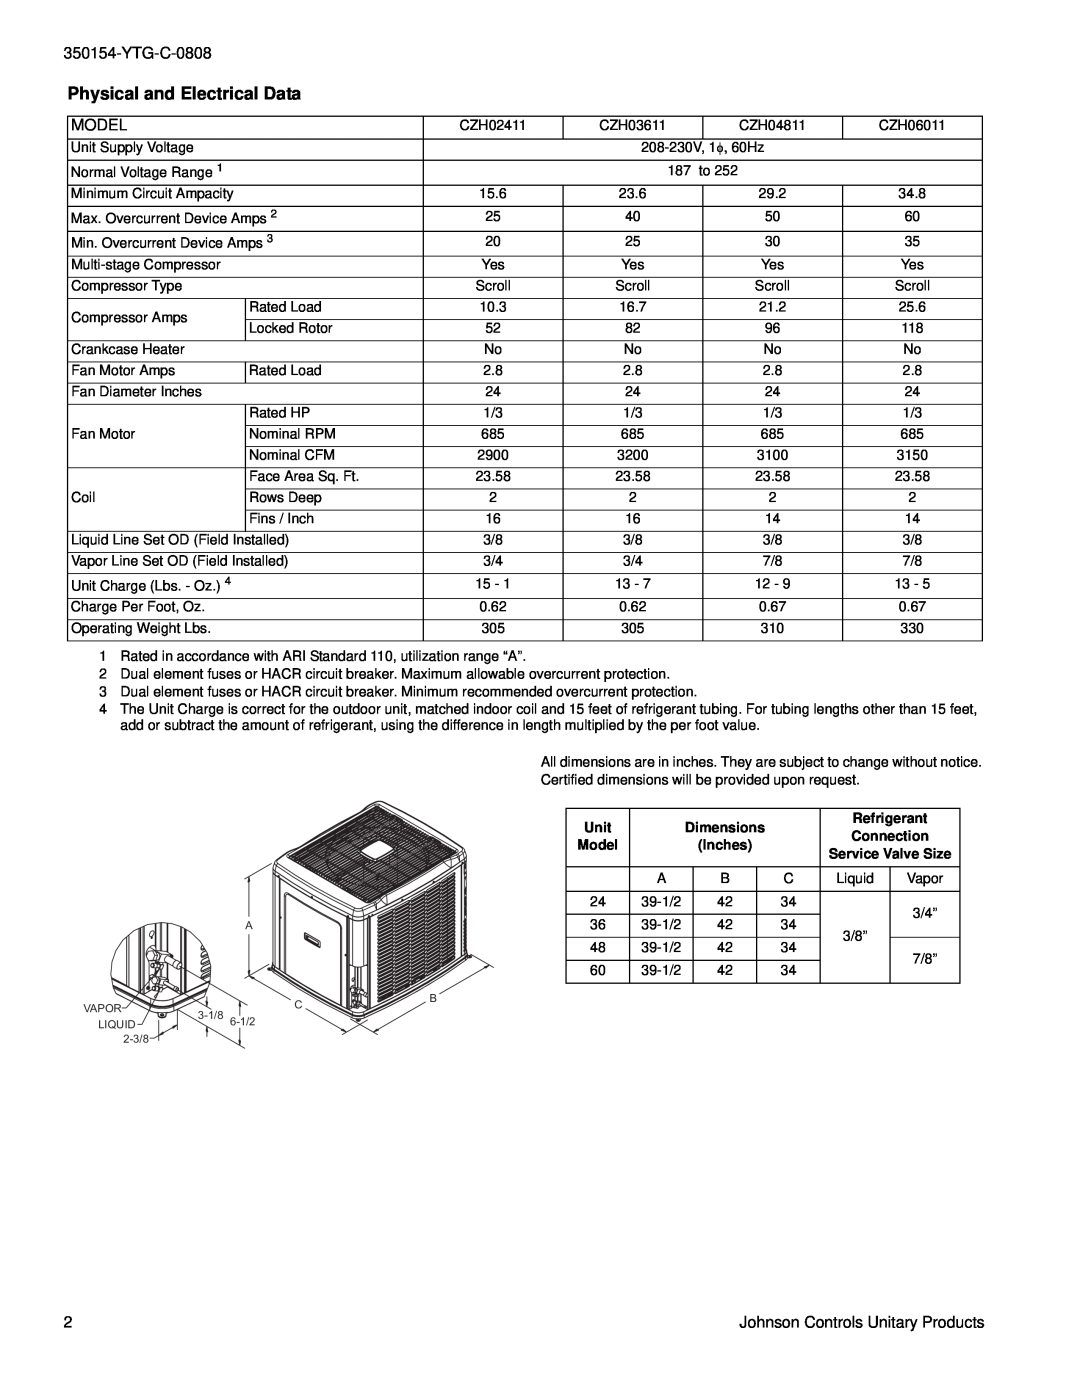 York CZH024 THRU 060 warranty Physical and Electrical Data, YTG-C-0808, Model 